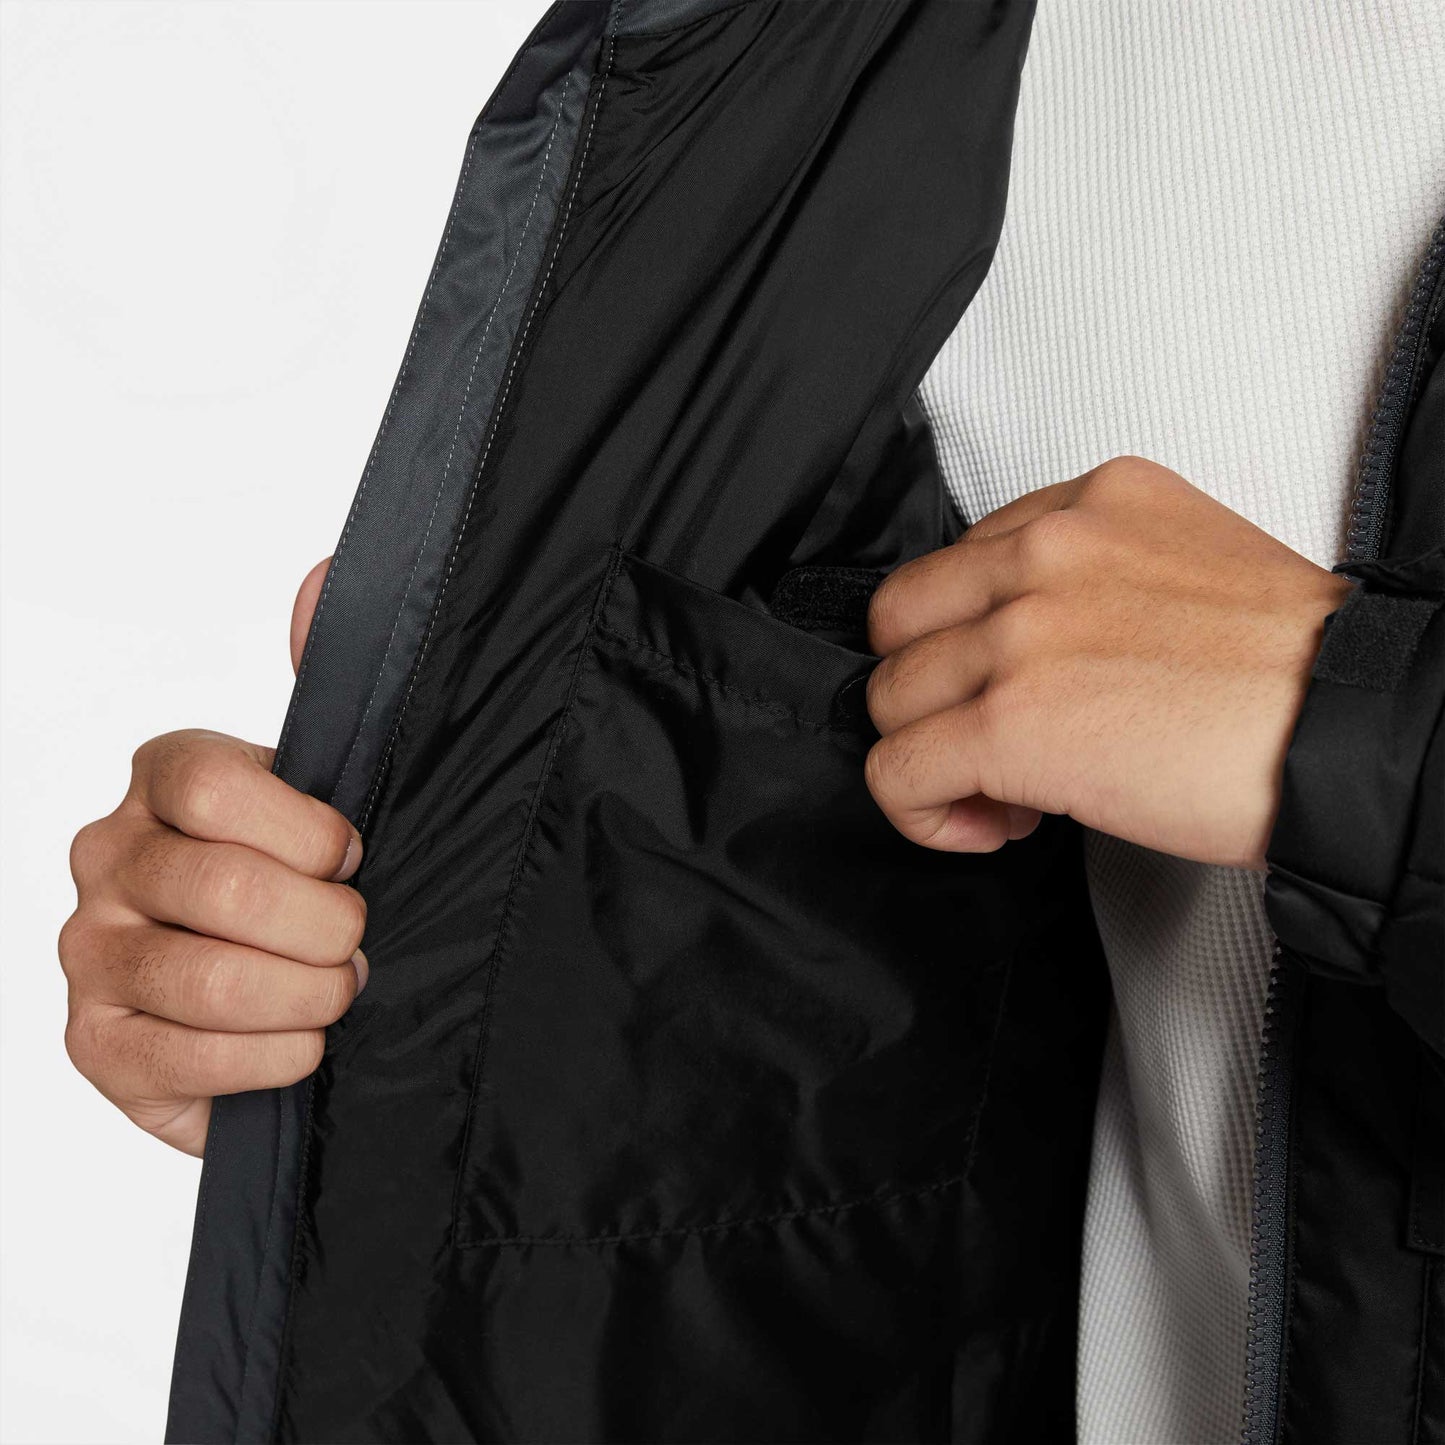 Nike SB Storm-fit Ishod Wair jacket, black/anthracite/university red - Tiki Room Skateboards - 4